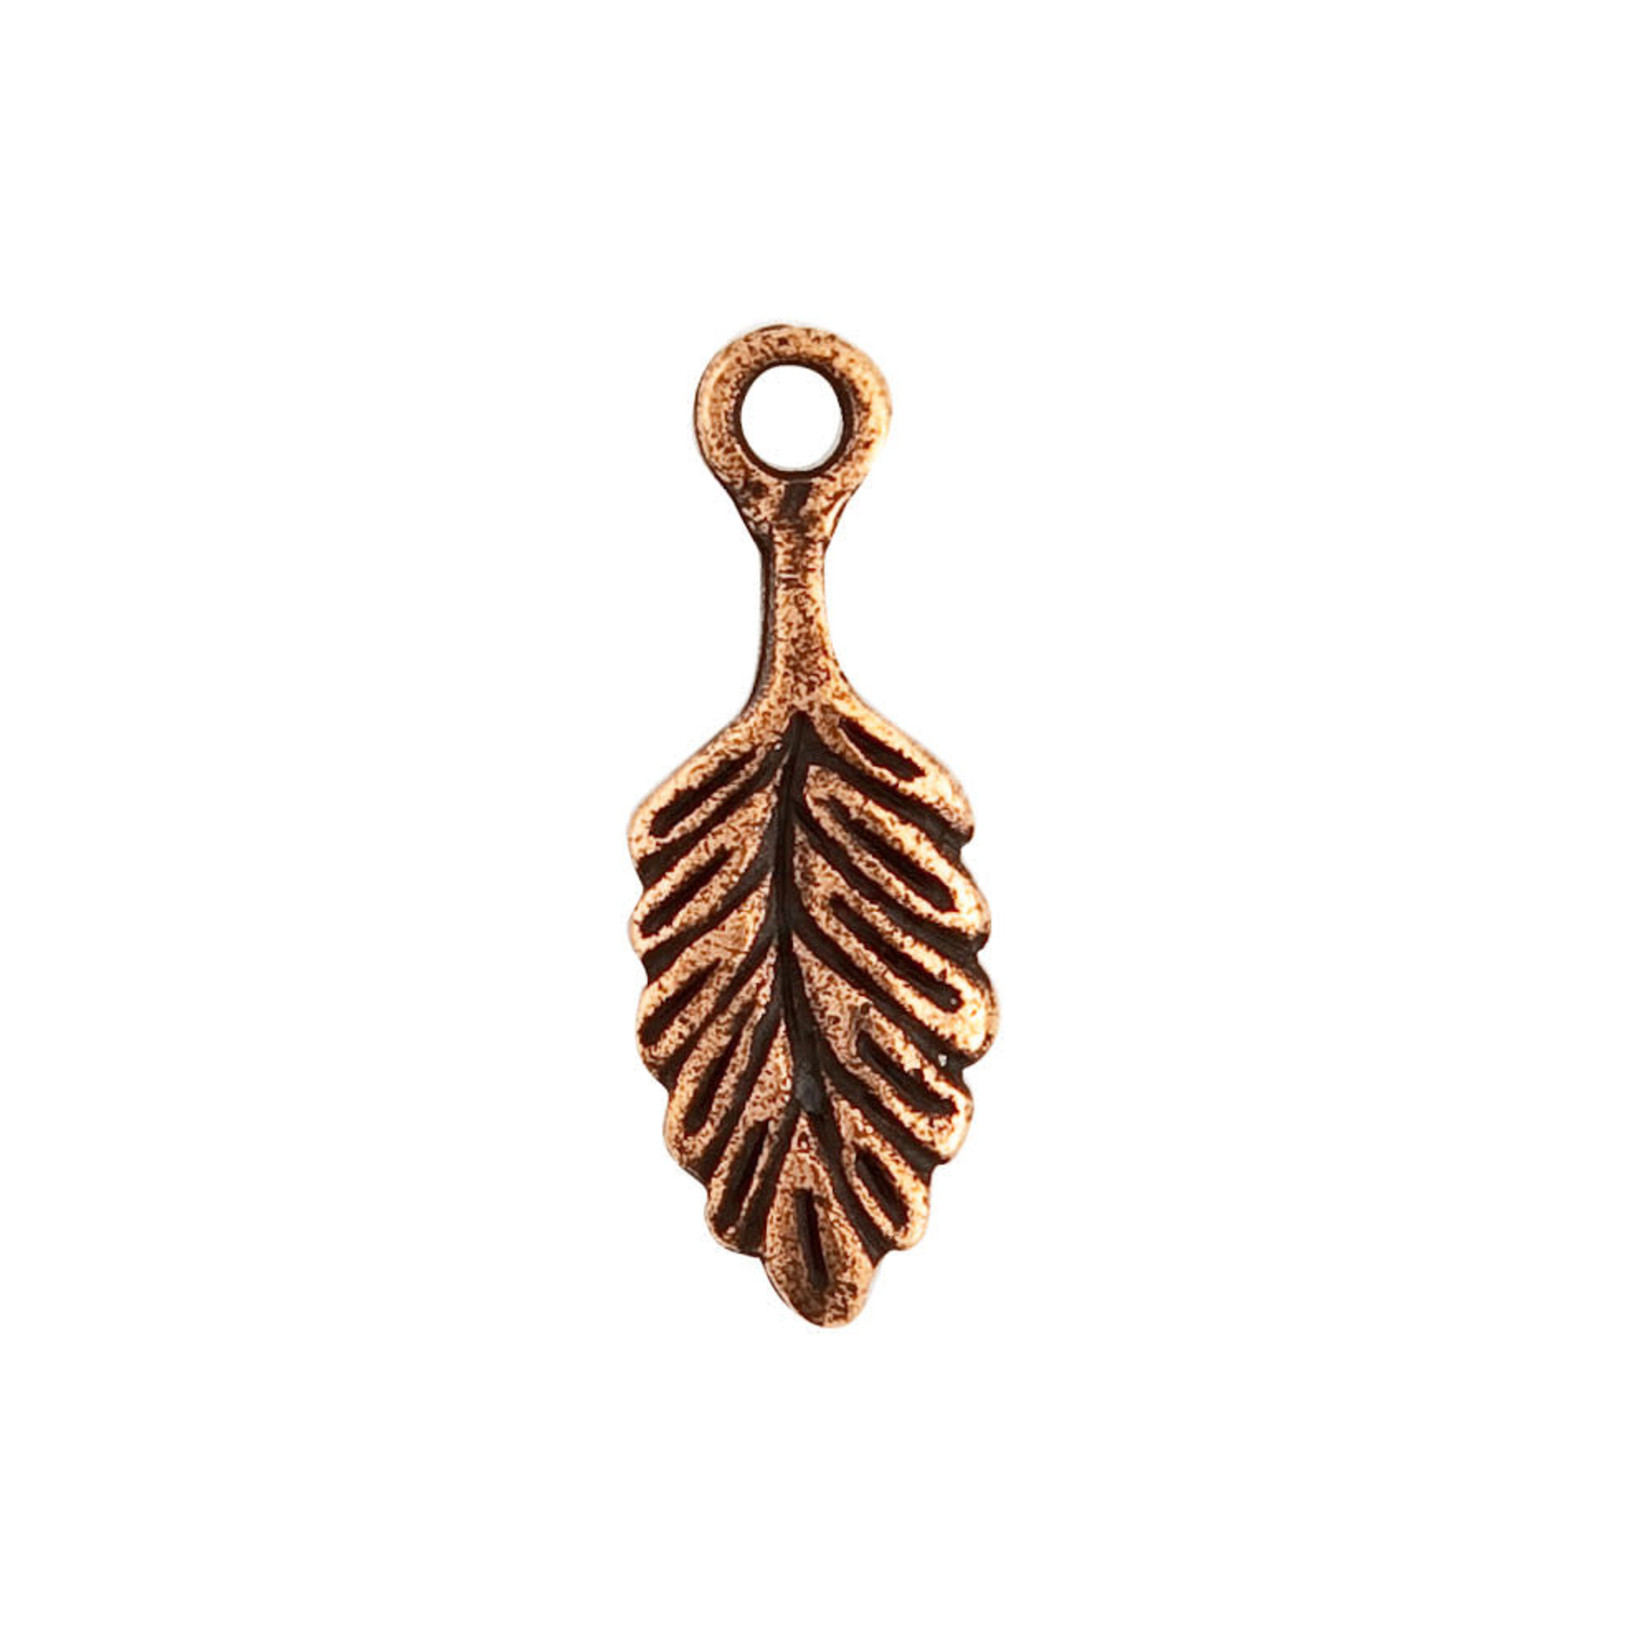 Nunn Design Leaf Charm Copper Plated